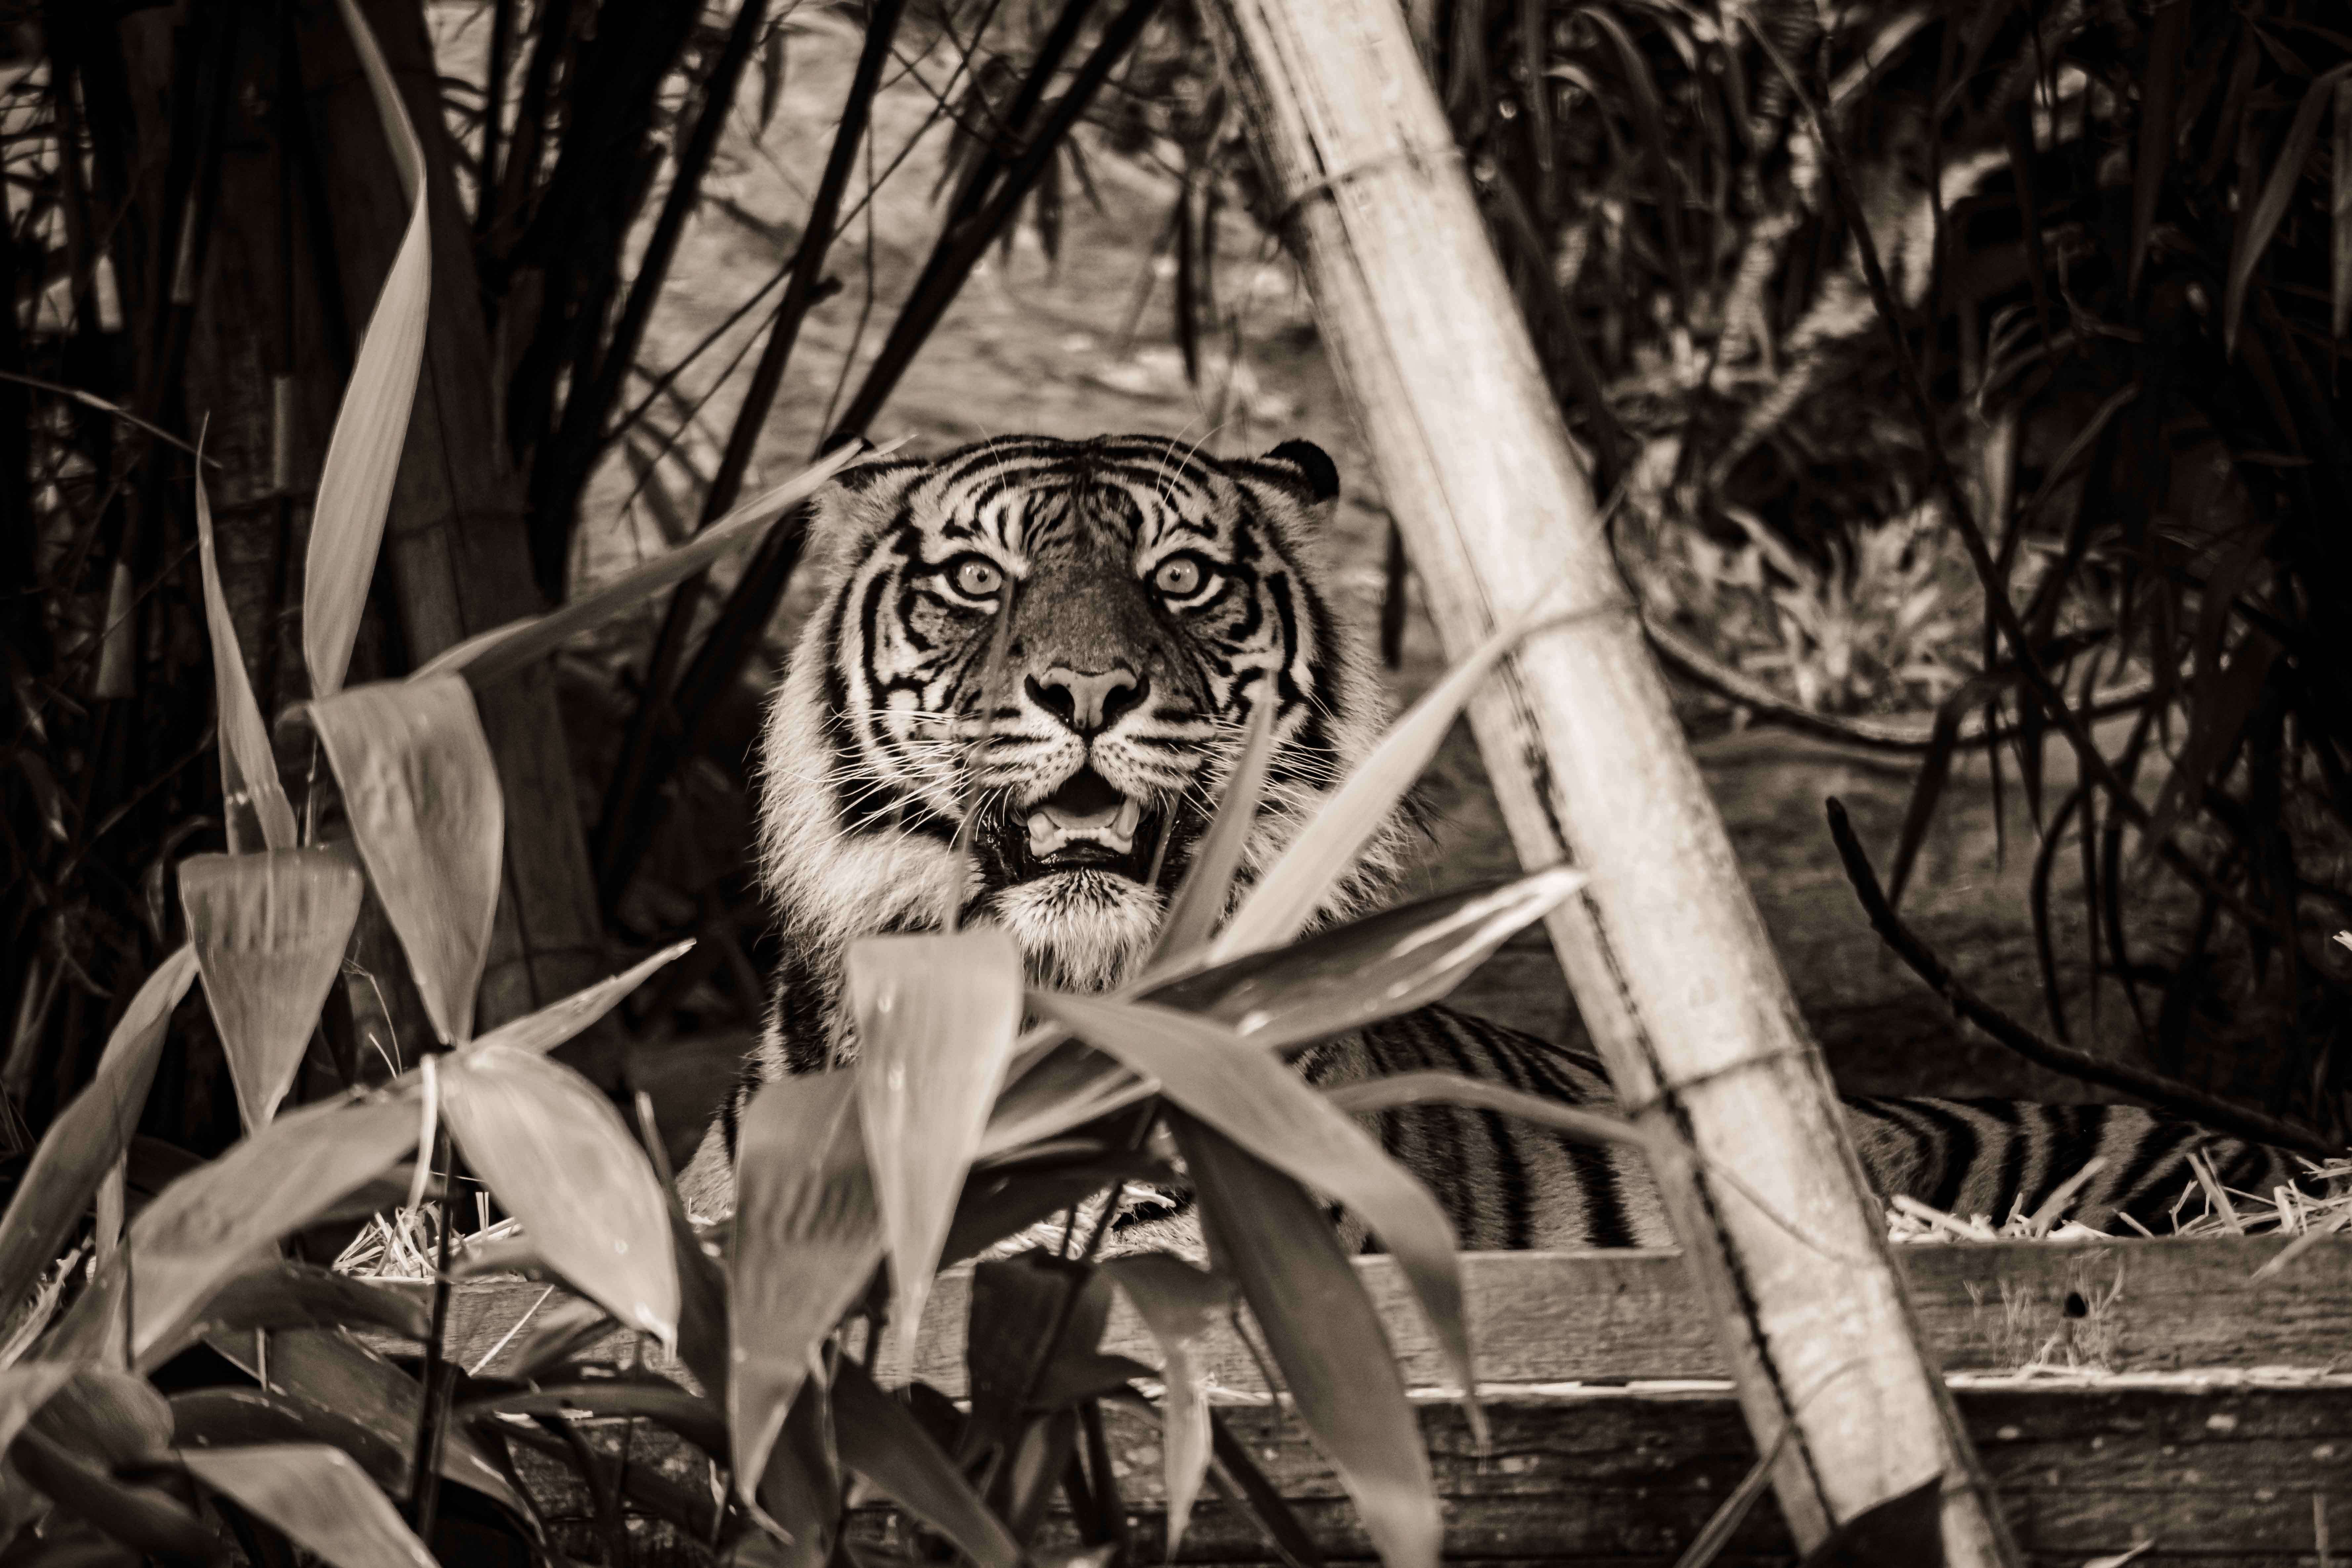 SEMD180 - DSC_7289 Sepia - 
Sumatran Tiger, Taronga Zoo,  Sydney, NSW, Australia.
1st July 2020 - 10.24am
Camera - Nikon D800 
F5.6 - ISO 1000 - 1/125 second - Focal Length 300mm : Wildlife - Sepia : Stephen E-Moran - Fine Art Photography